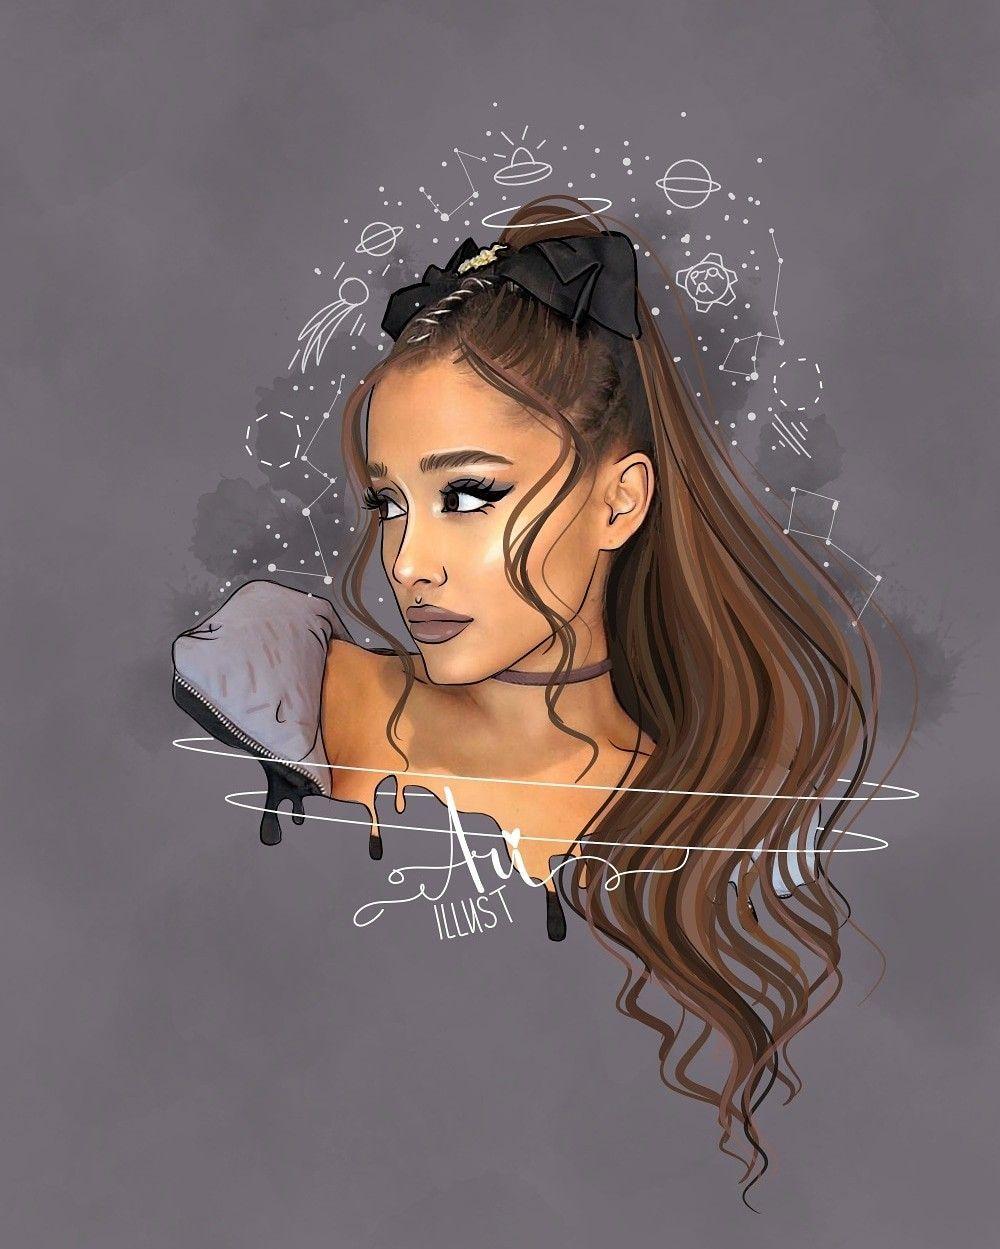 Ariana Grande Art Wallpapers - Top Free Ariana Grande Art Backgrounds ...